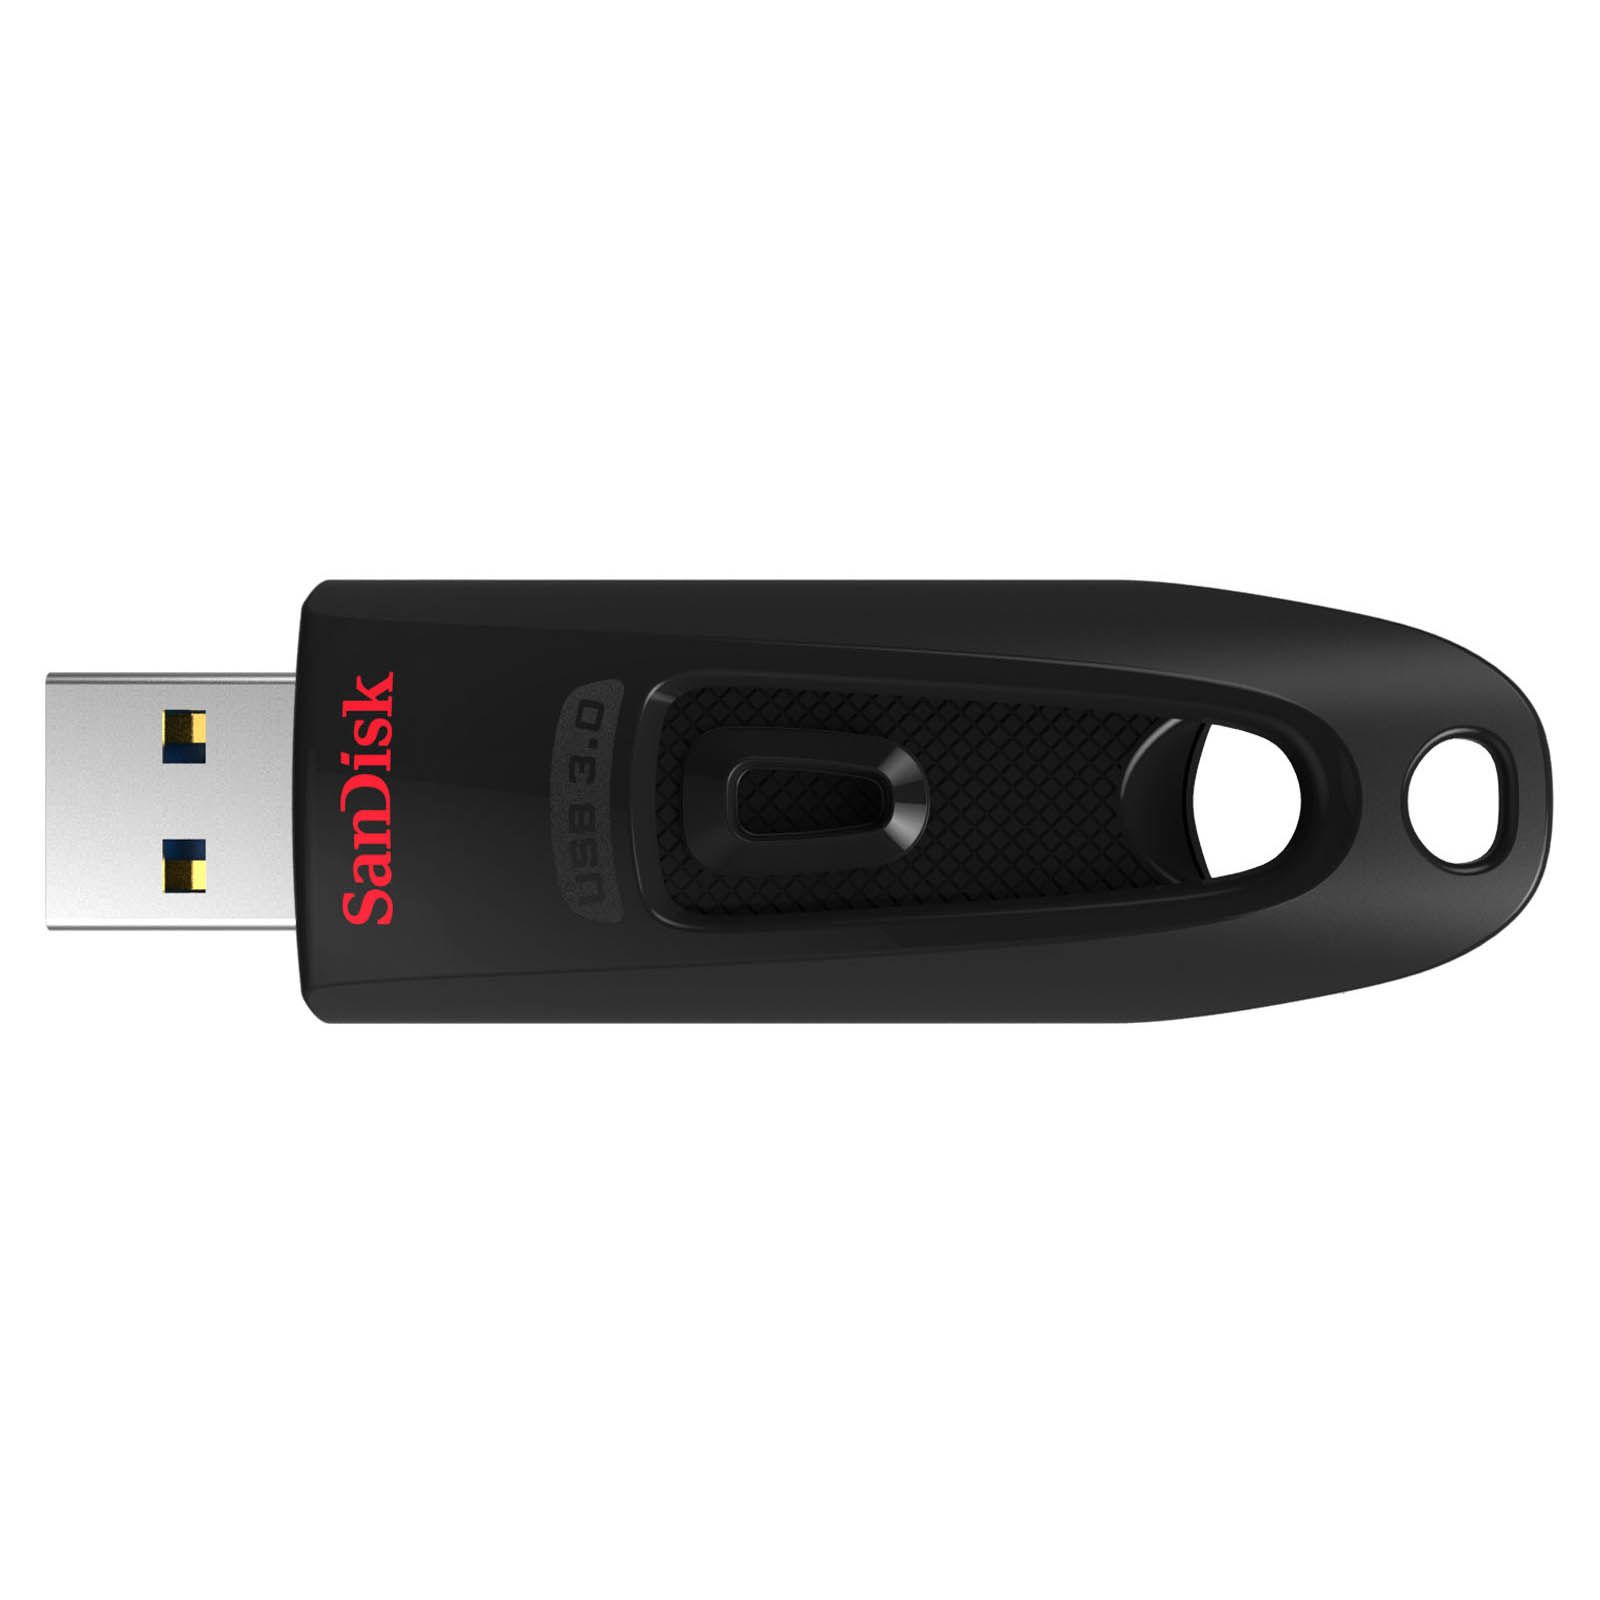 SanDisk Ultra Shift USB 3.2 Gen 1 Flash Drive